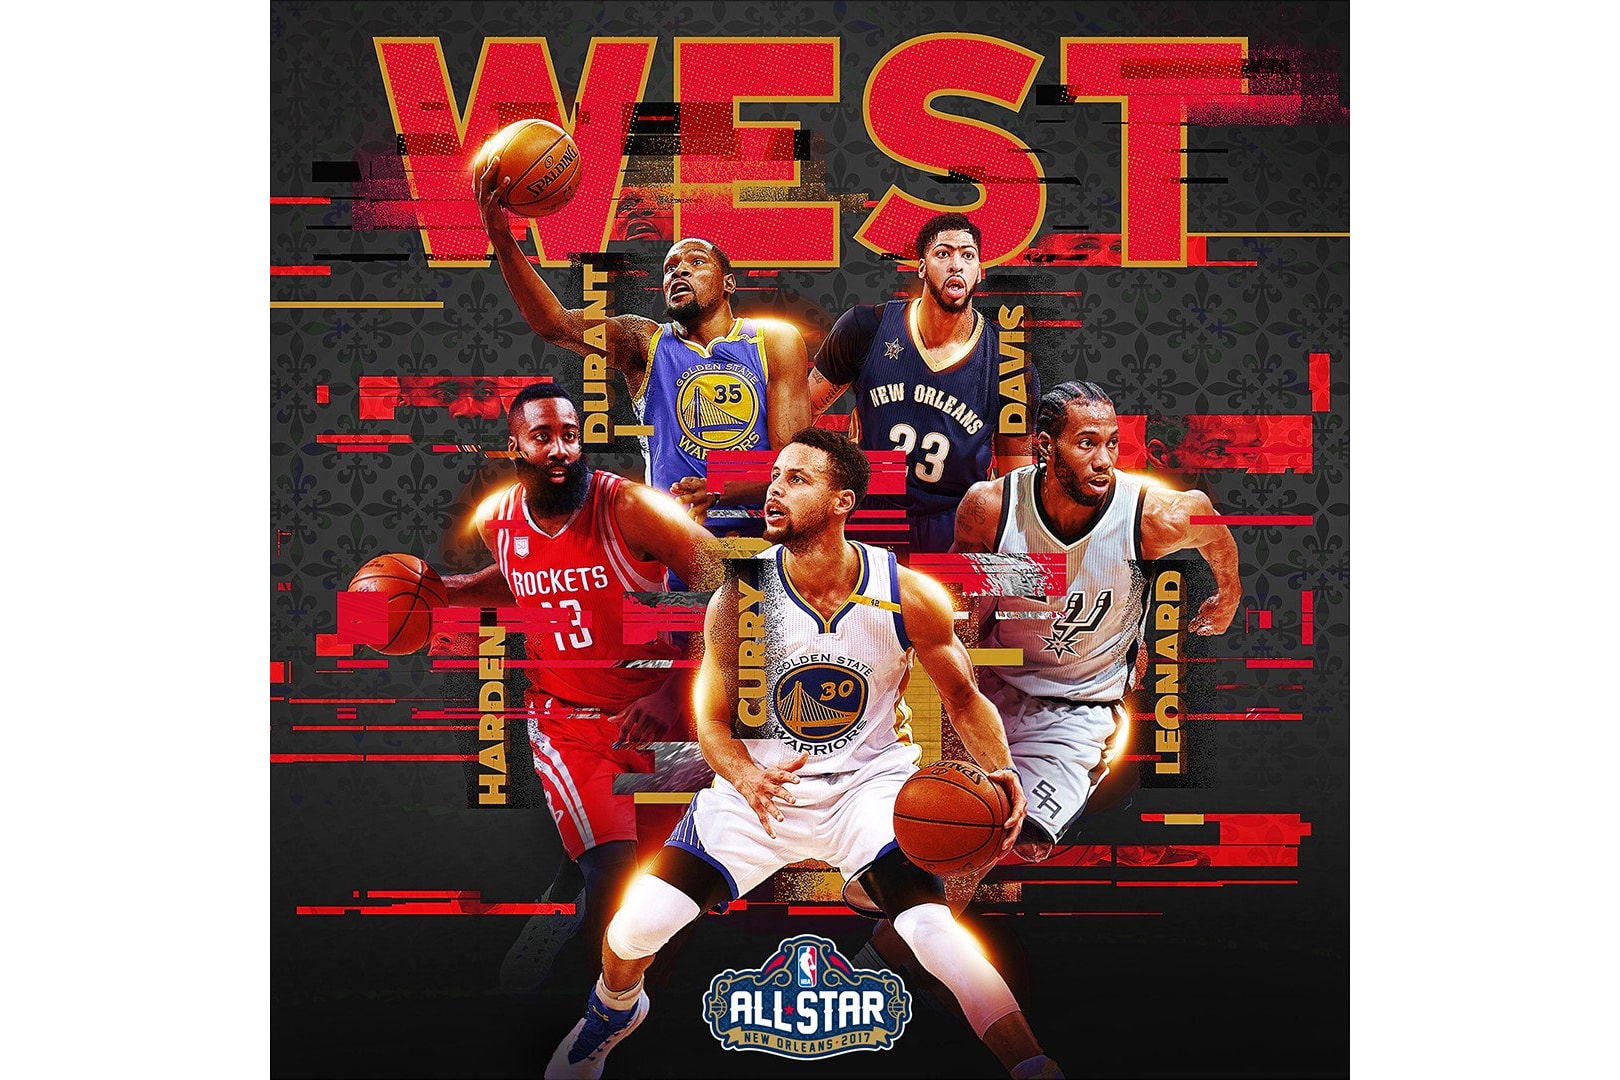 2017 NBA All-Star Starting Lineup